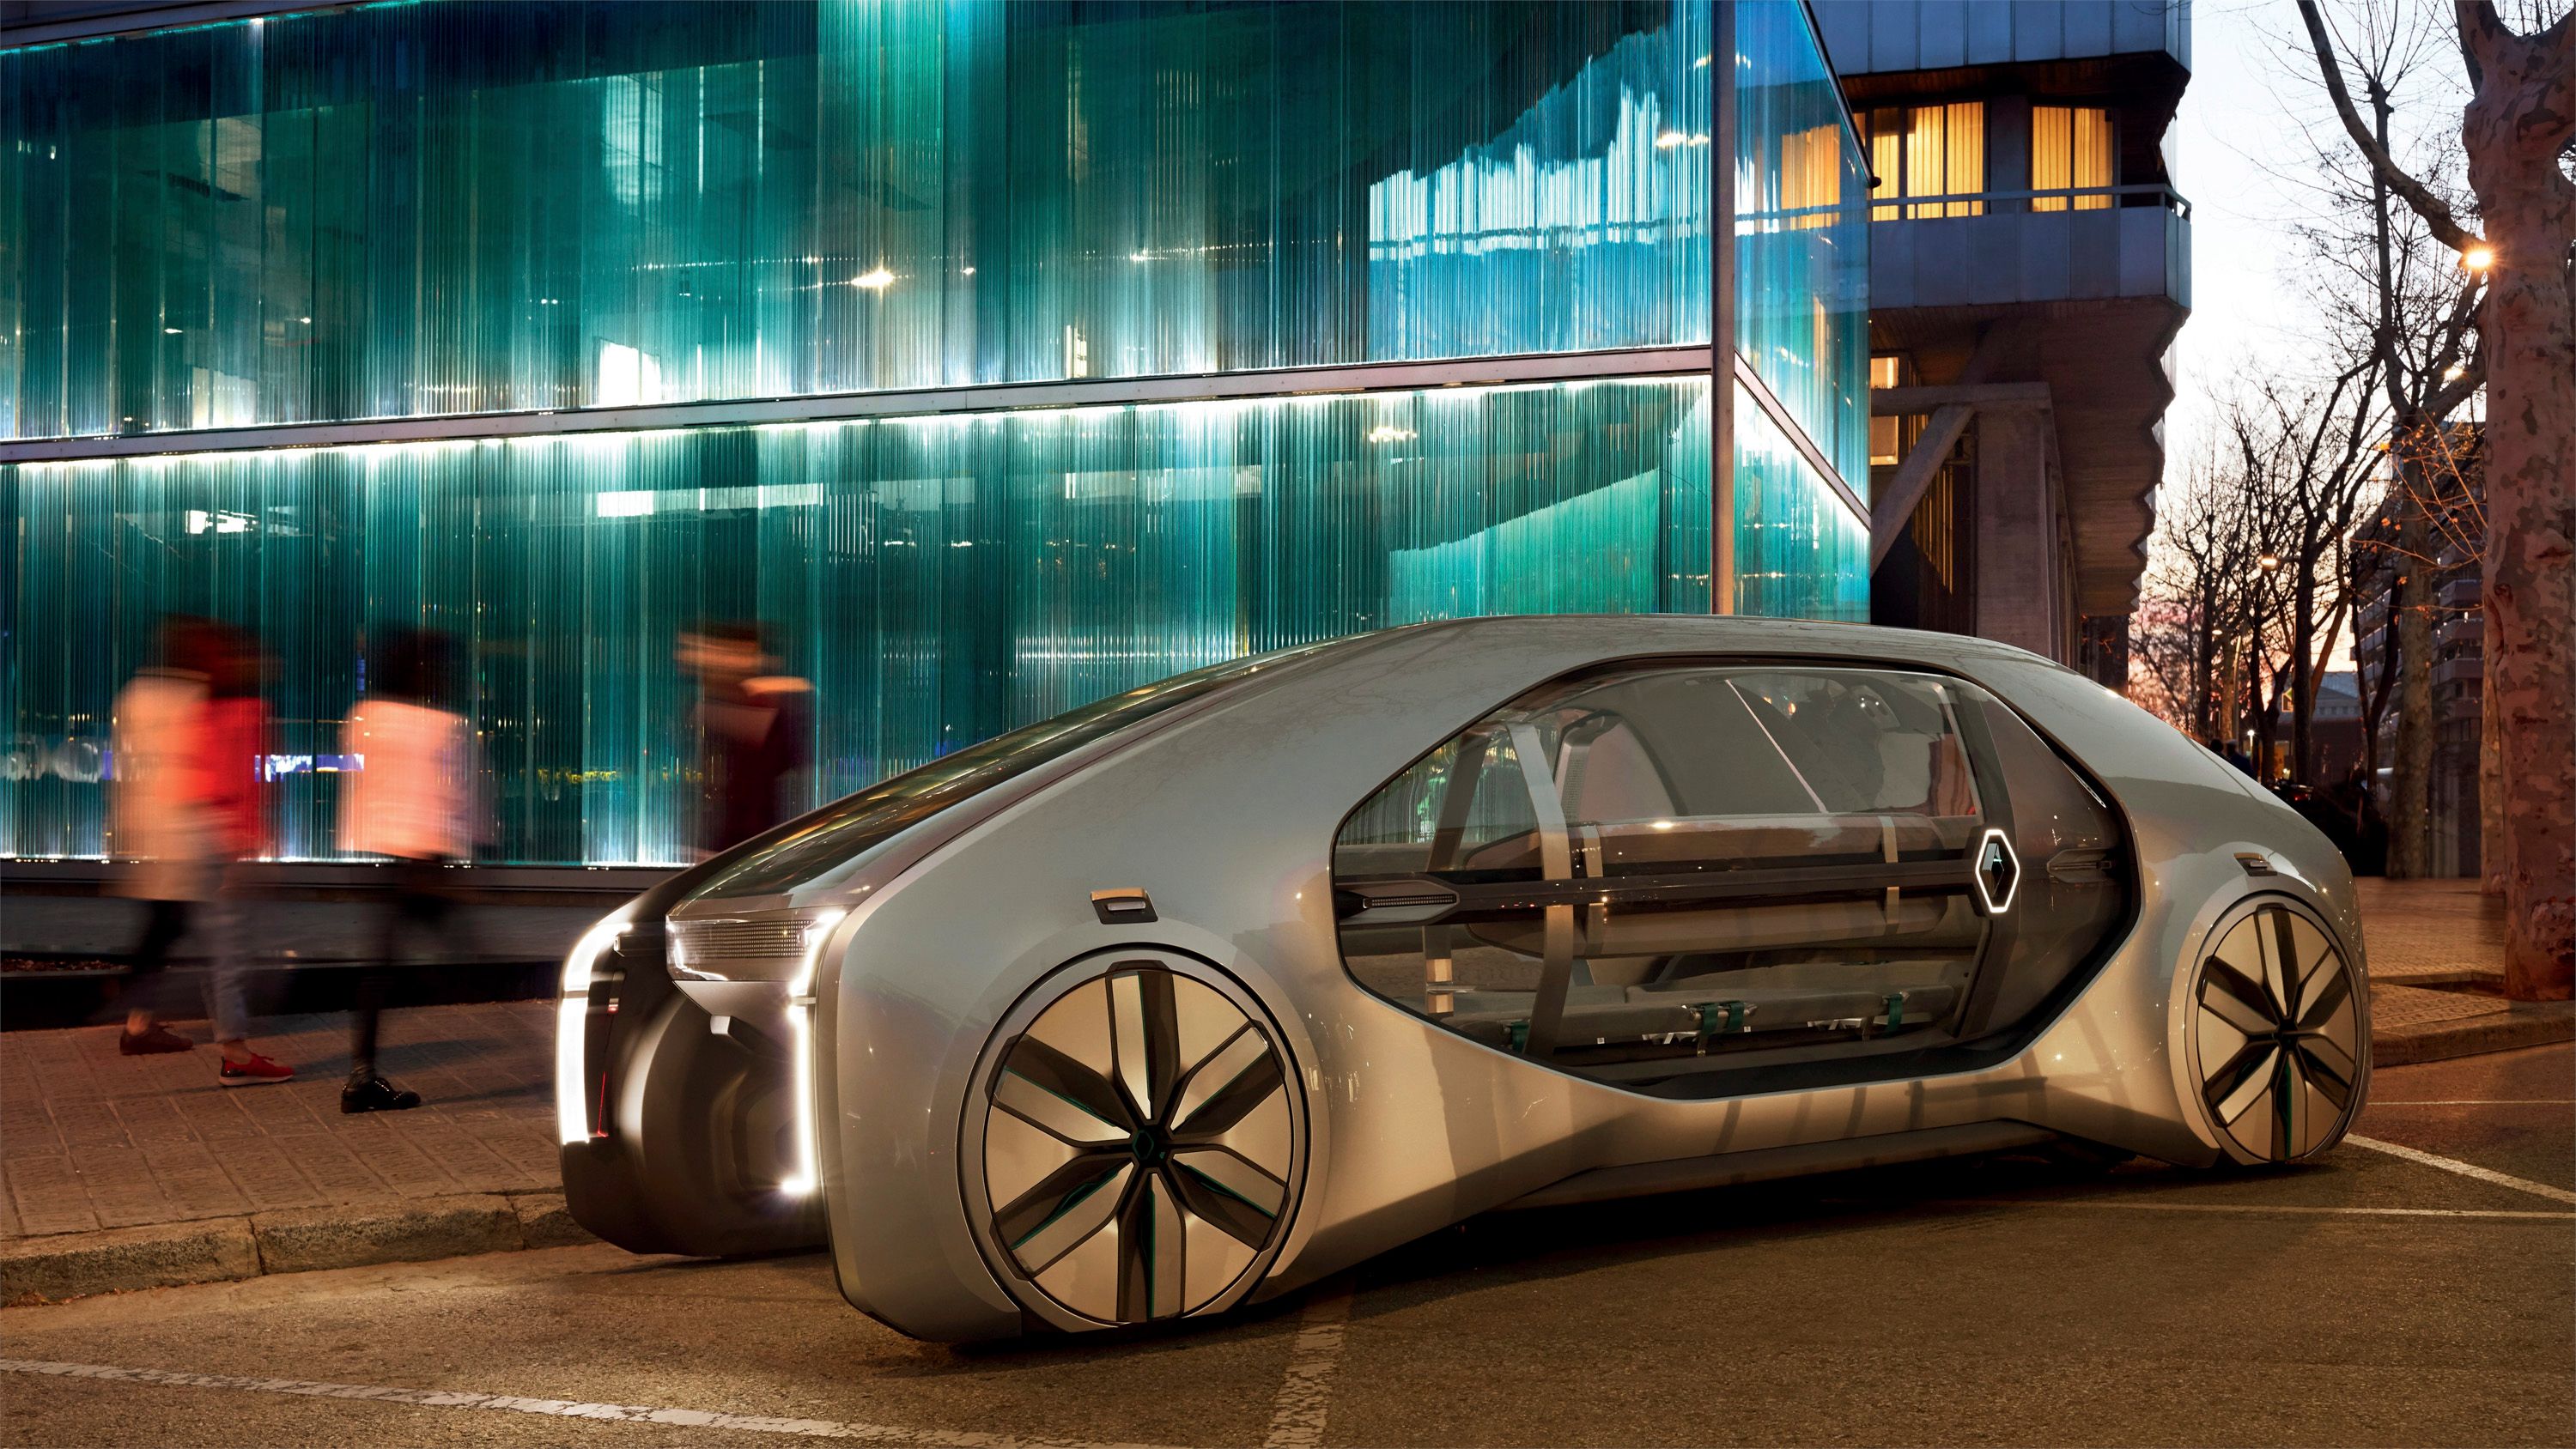 2018 Renault Showcases the Future of Urban Travel with the EZ-GO Autonomous People Hauler